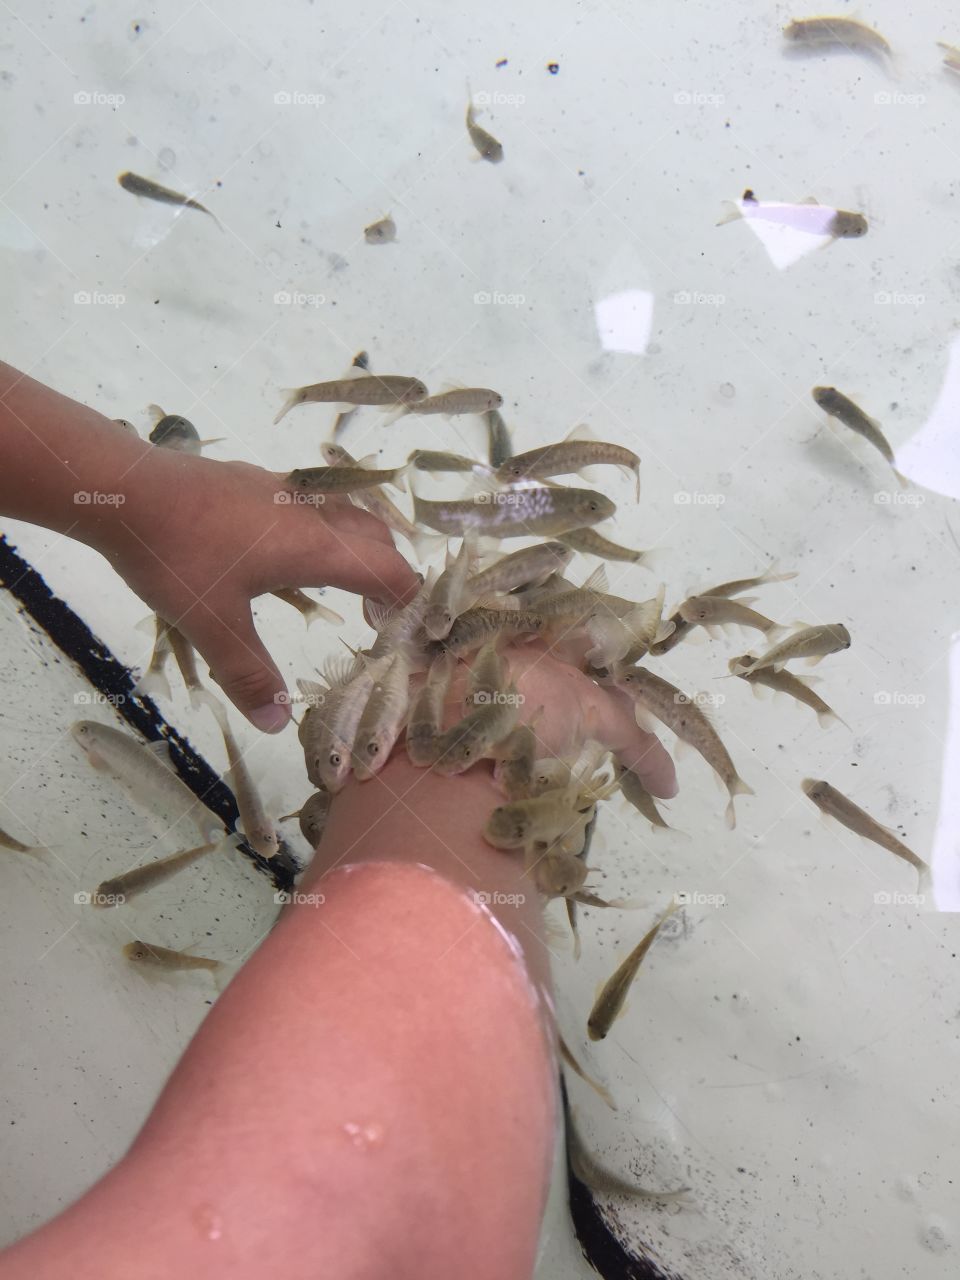 Feeding the fish